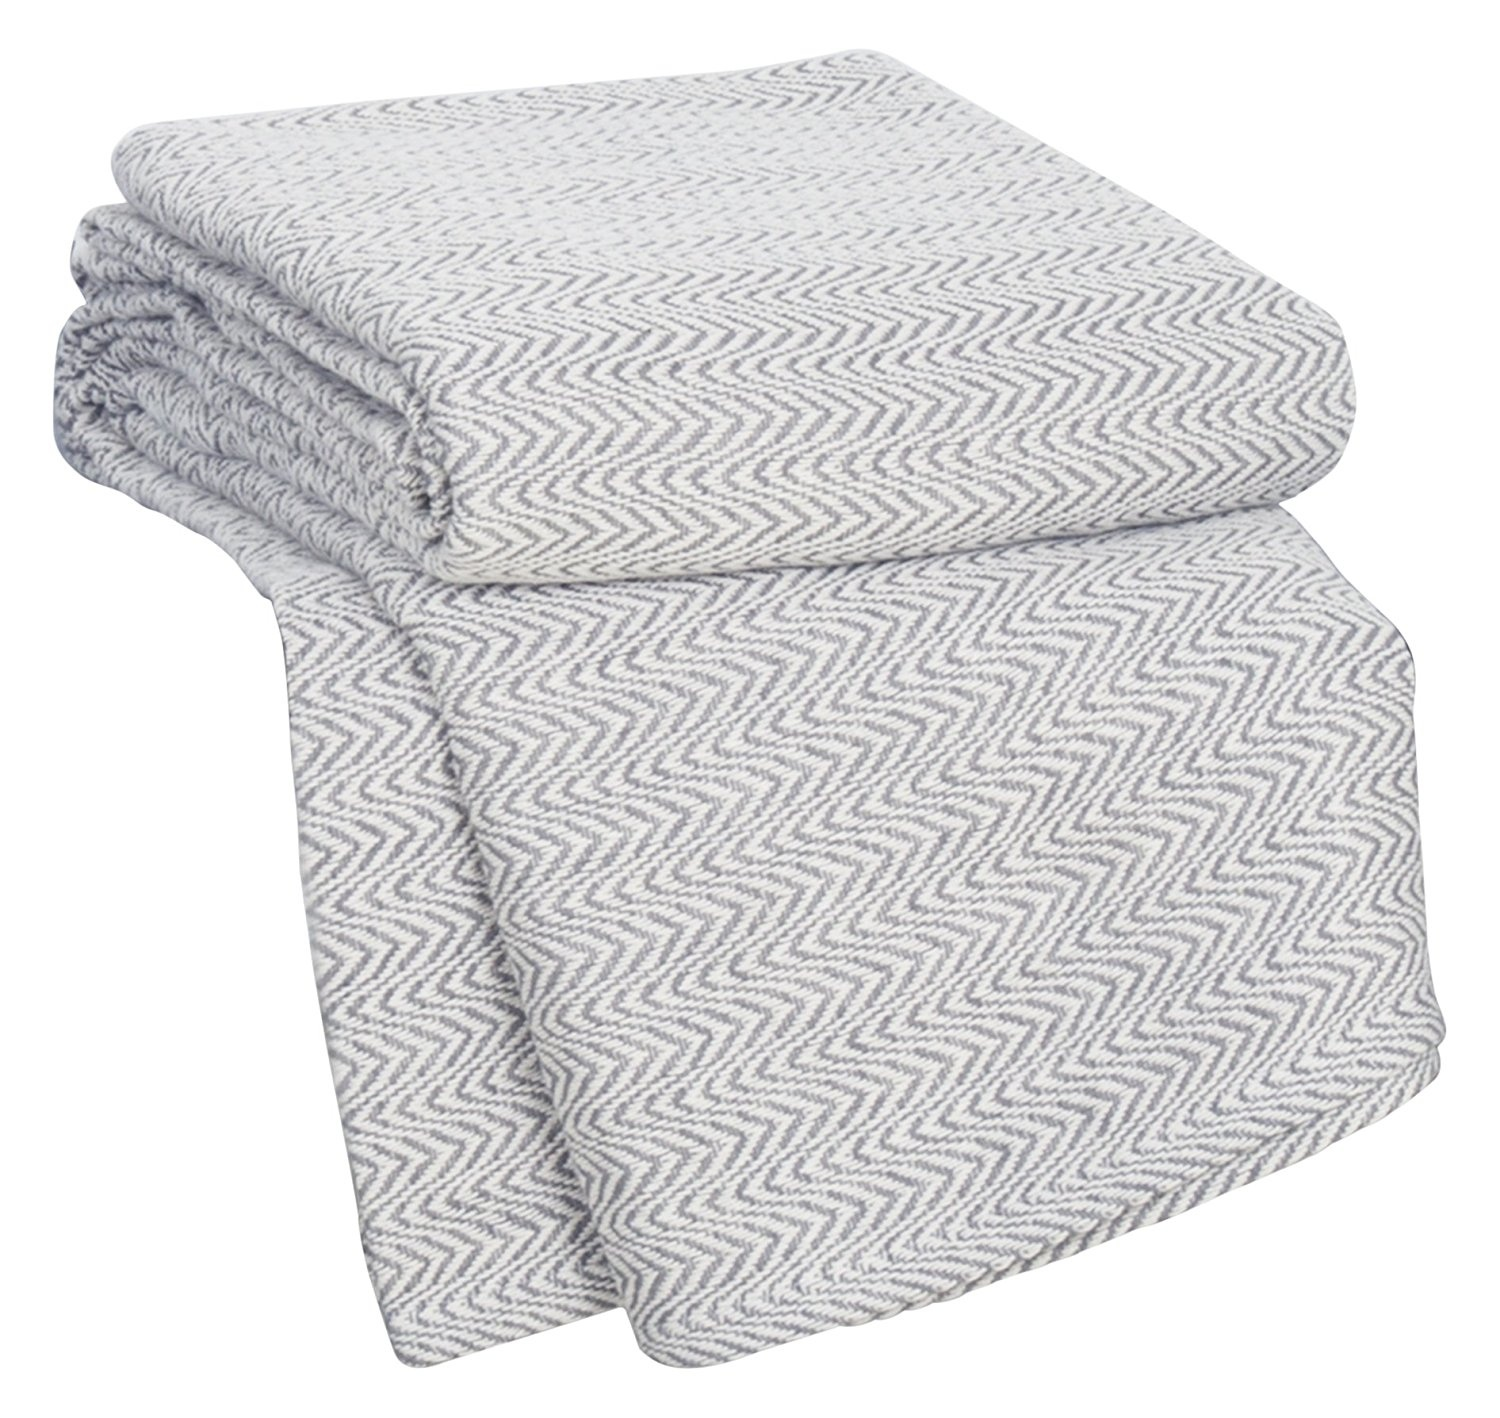 wool blanket manufacturers